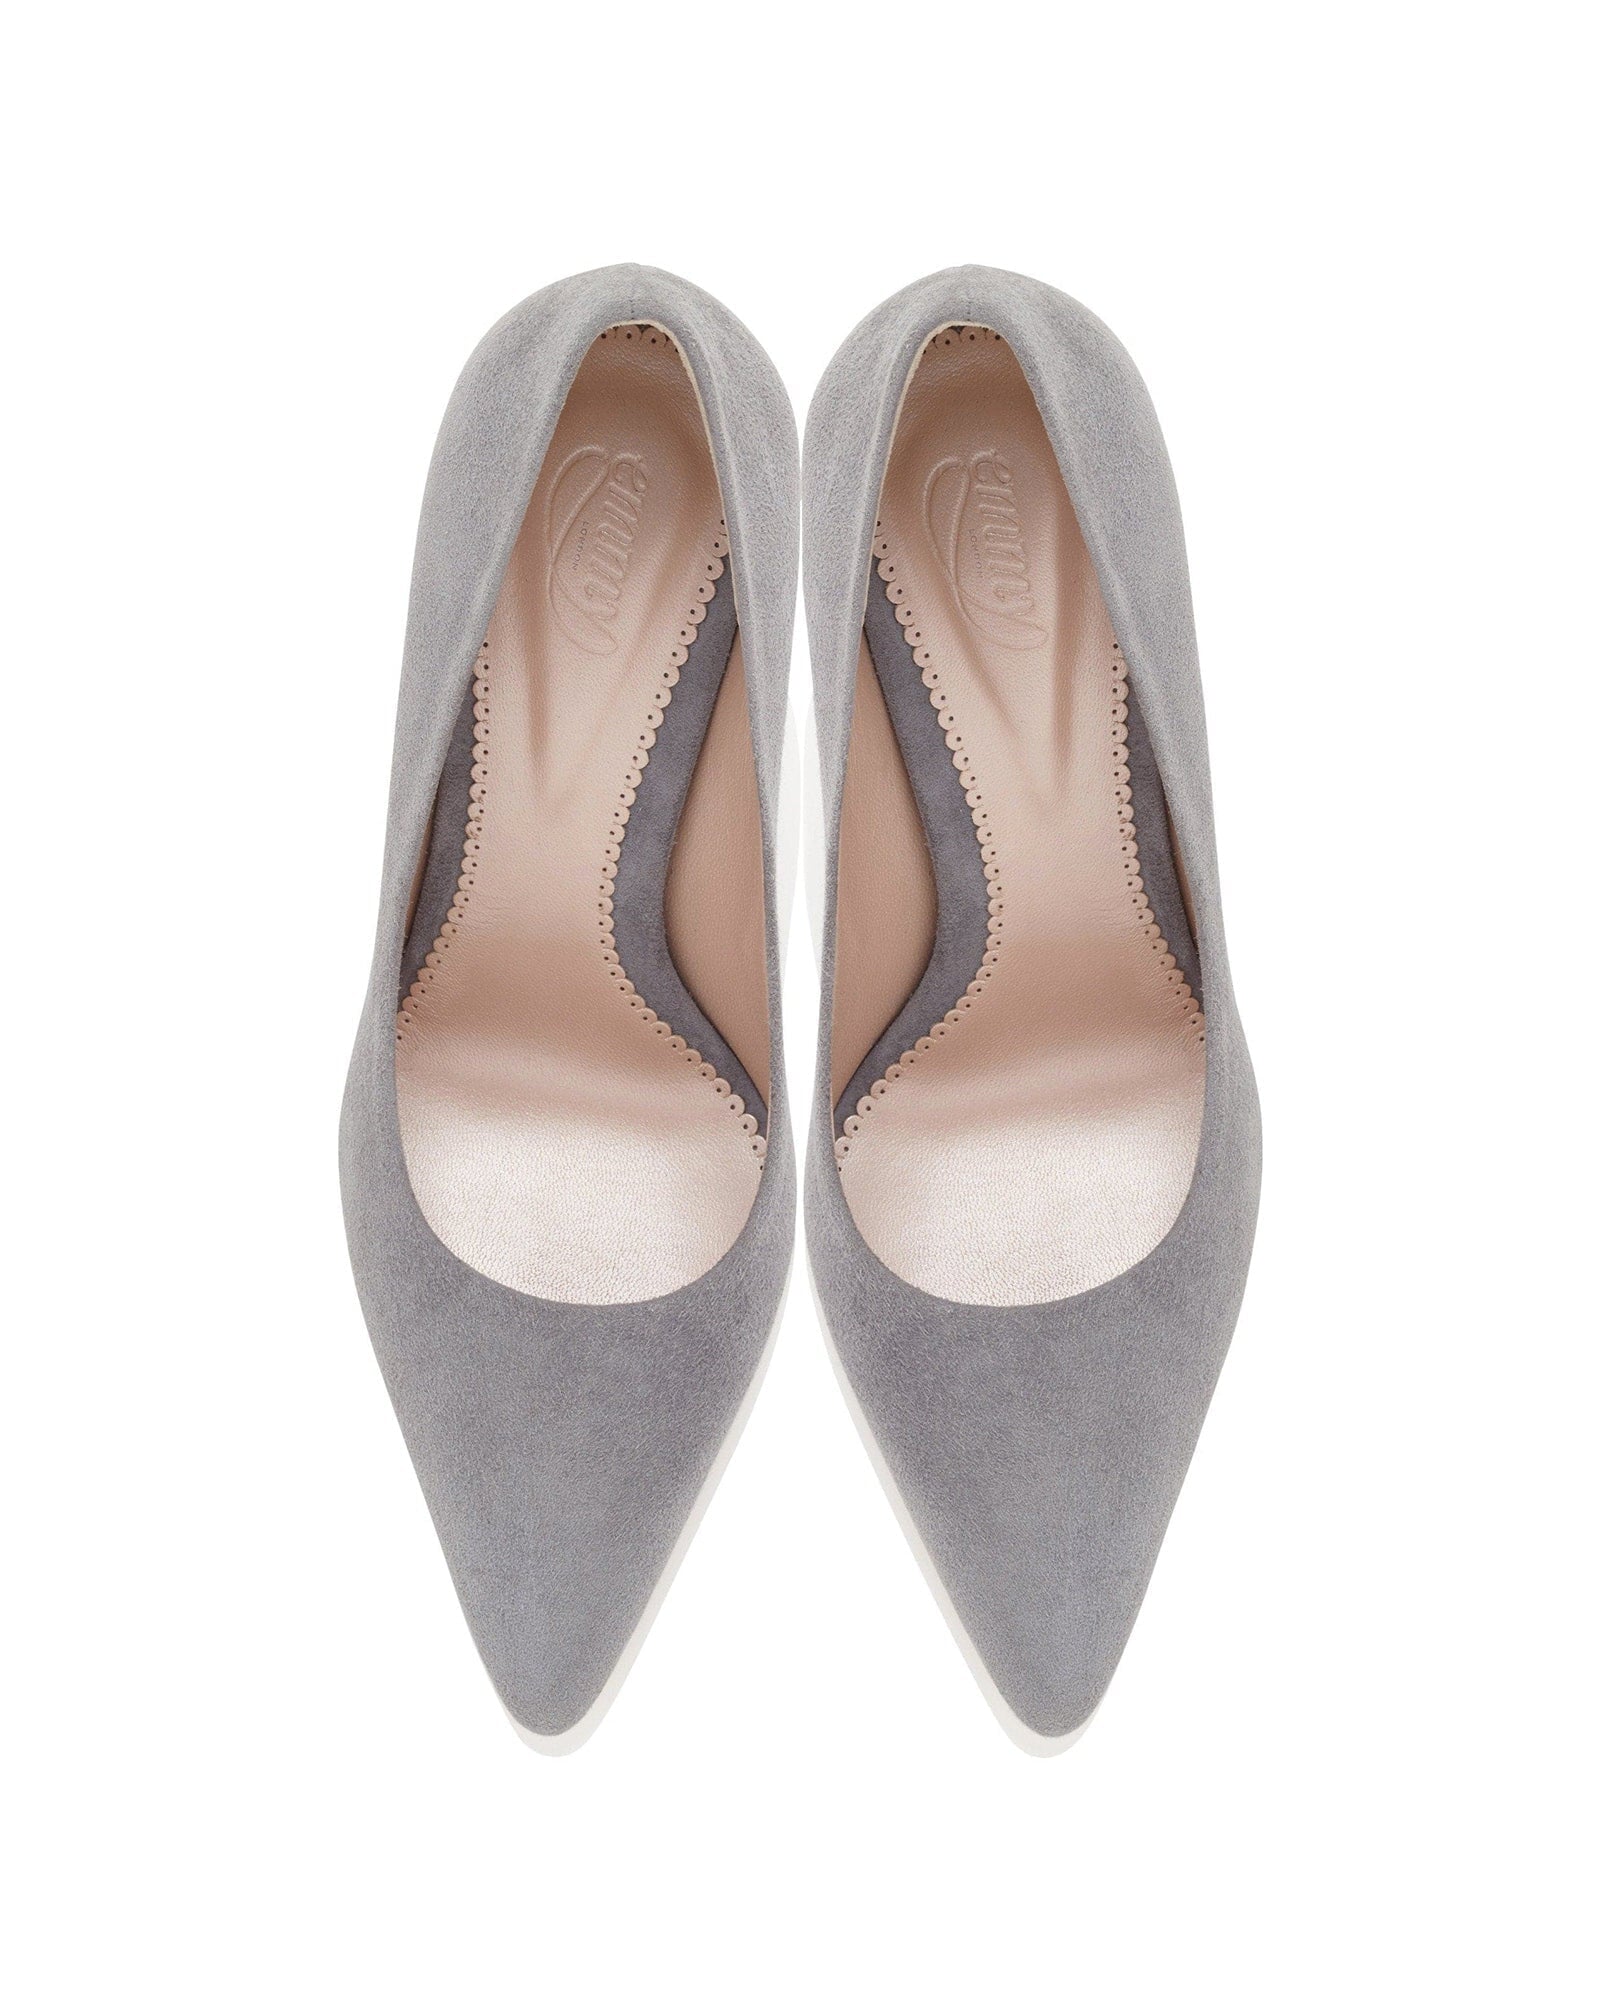 Claudia Mid Heel Fashion Shoe Grey Pointed Court Shoe  image